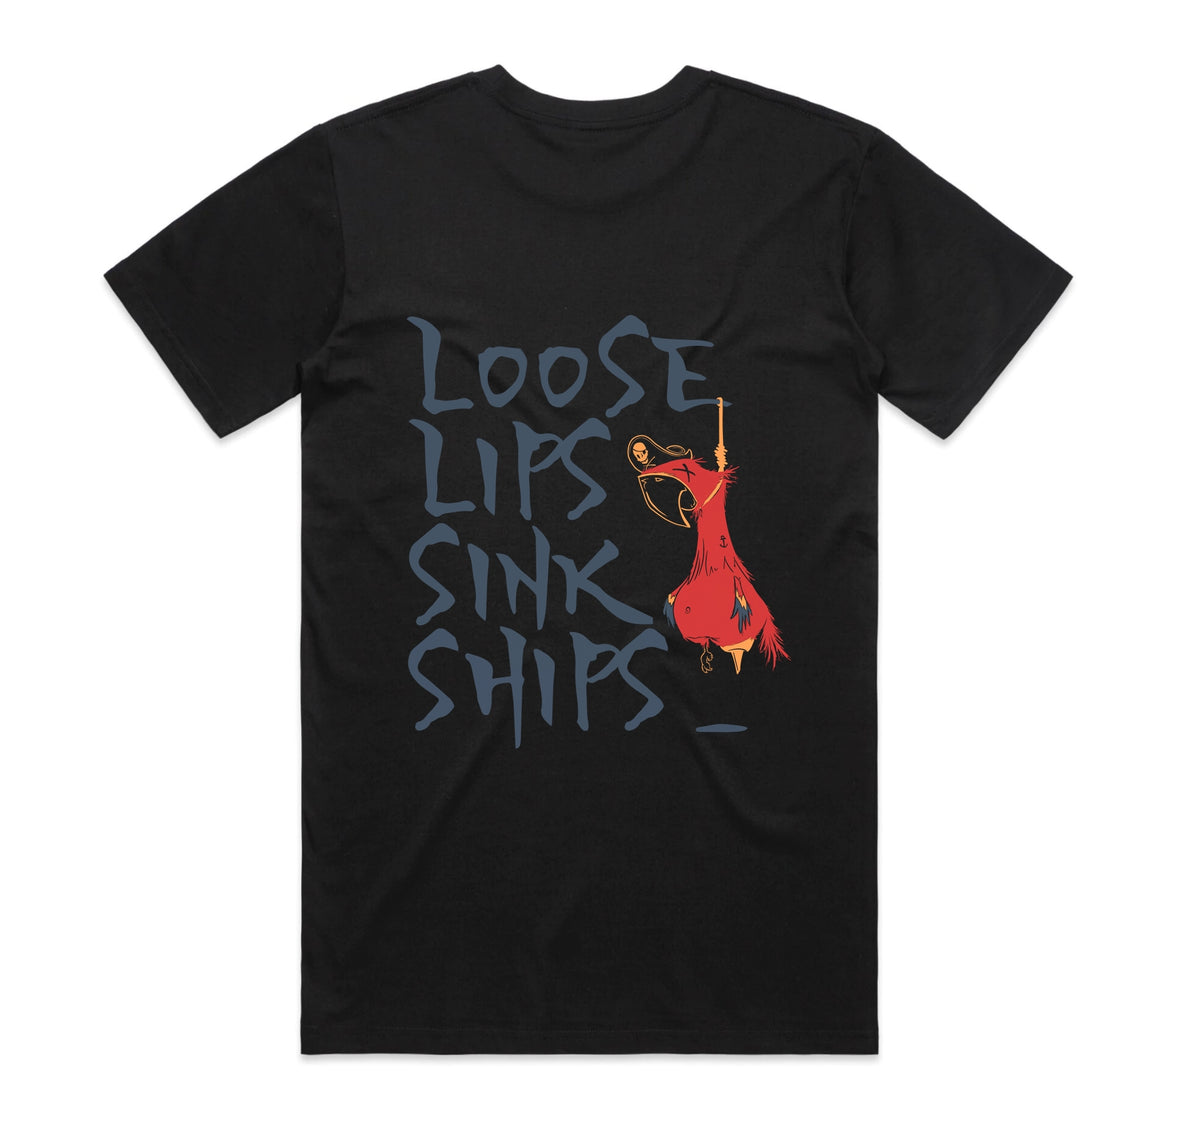 Loose lips sink ships t-shirt